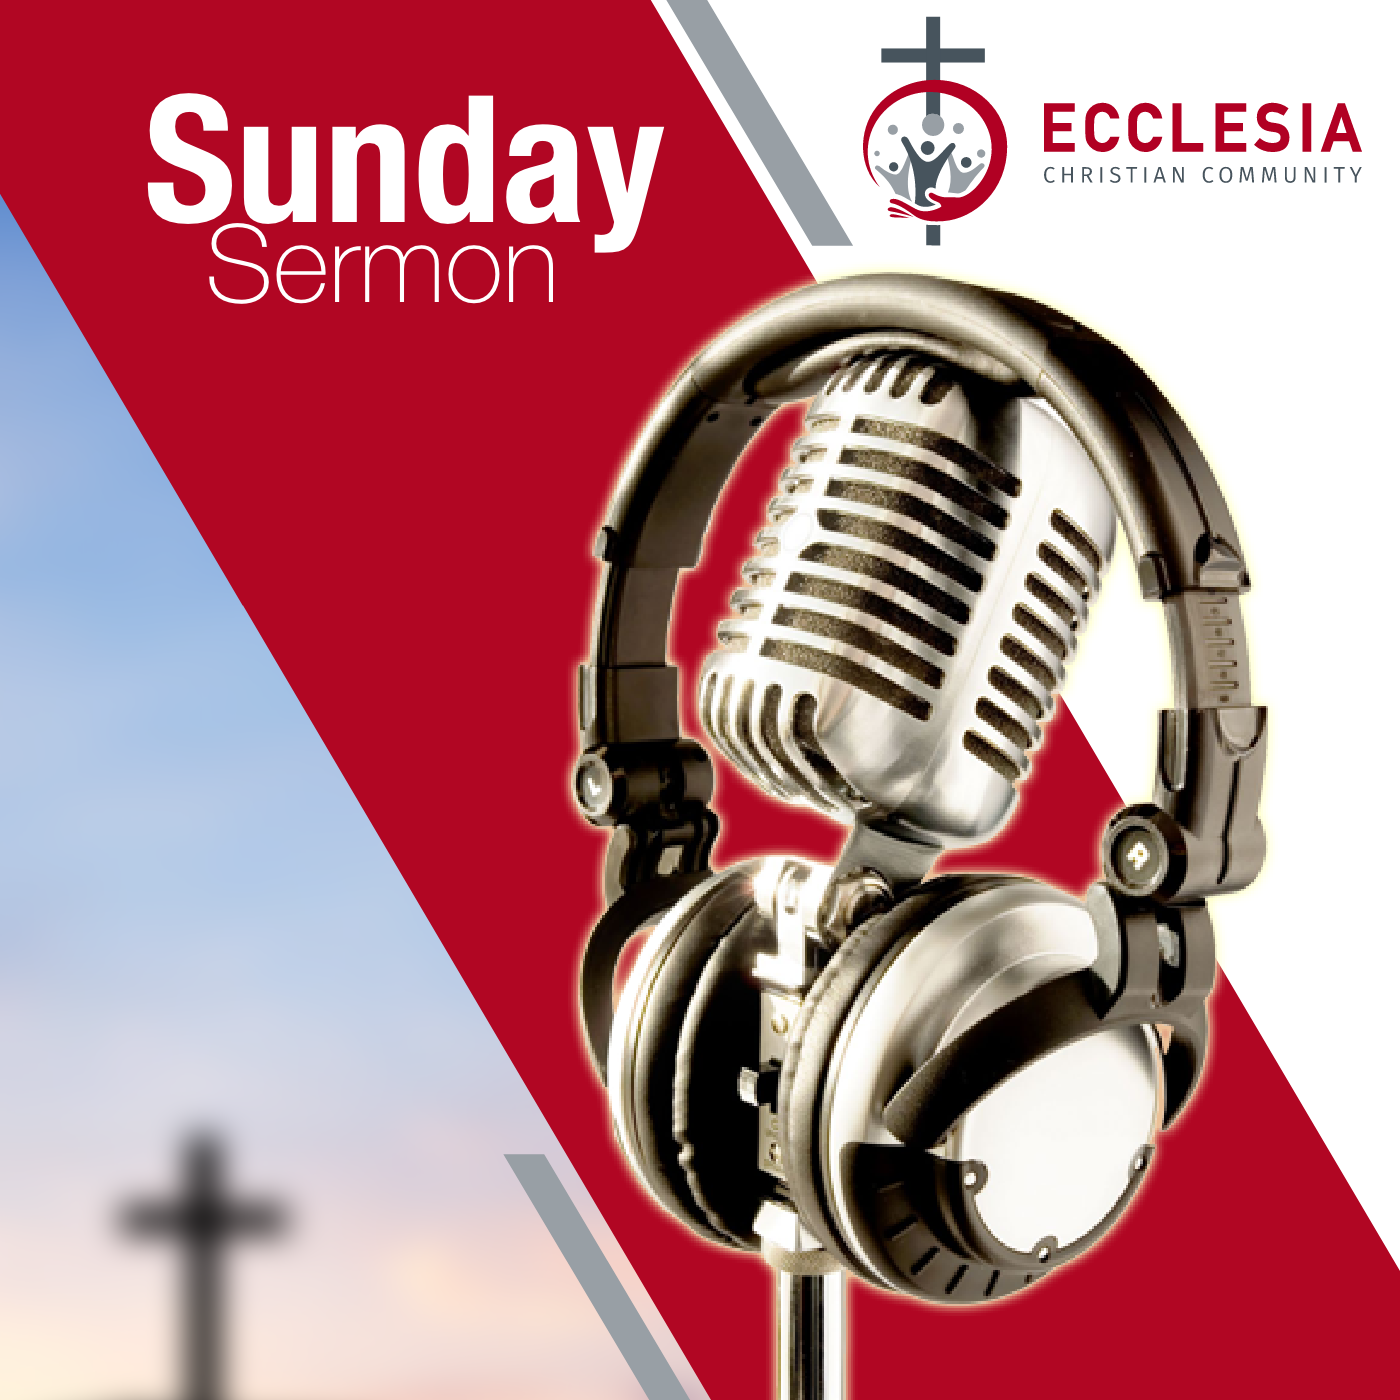 Ecclesia Christian Community